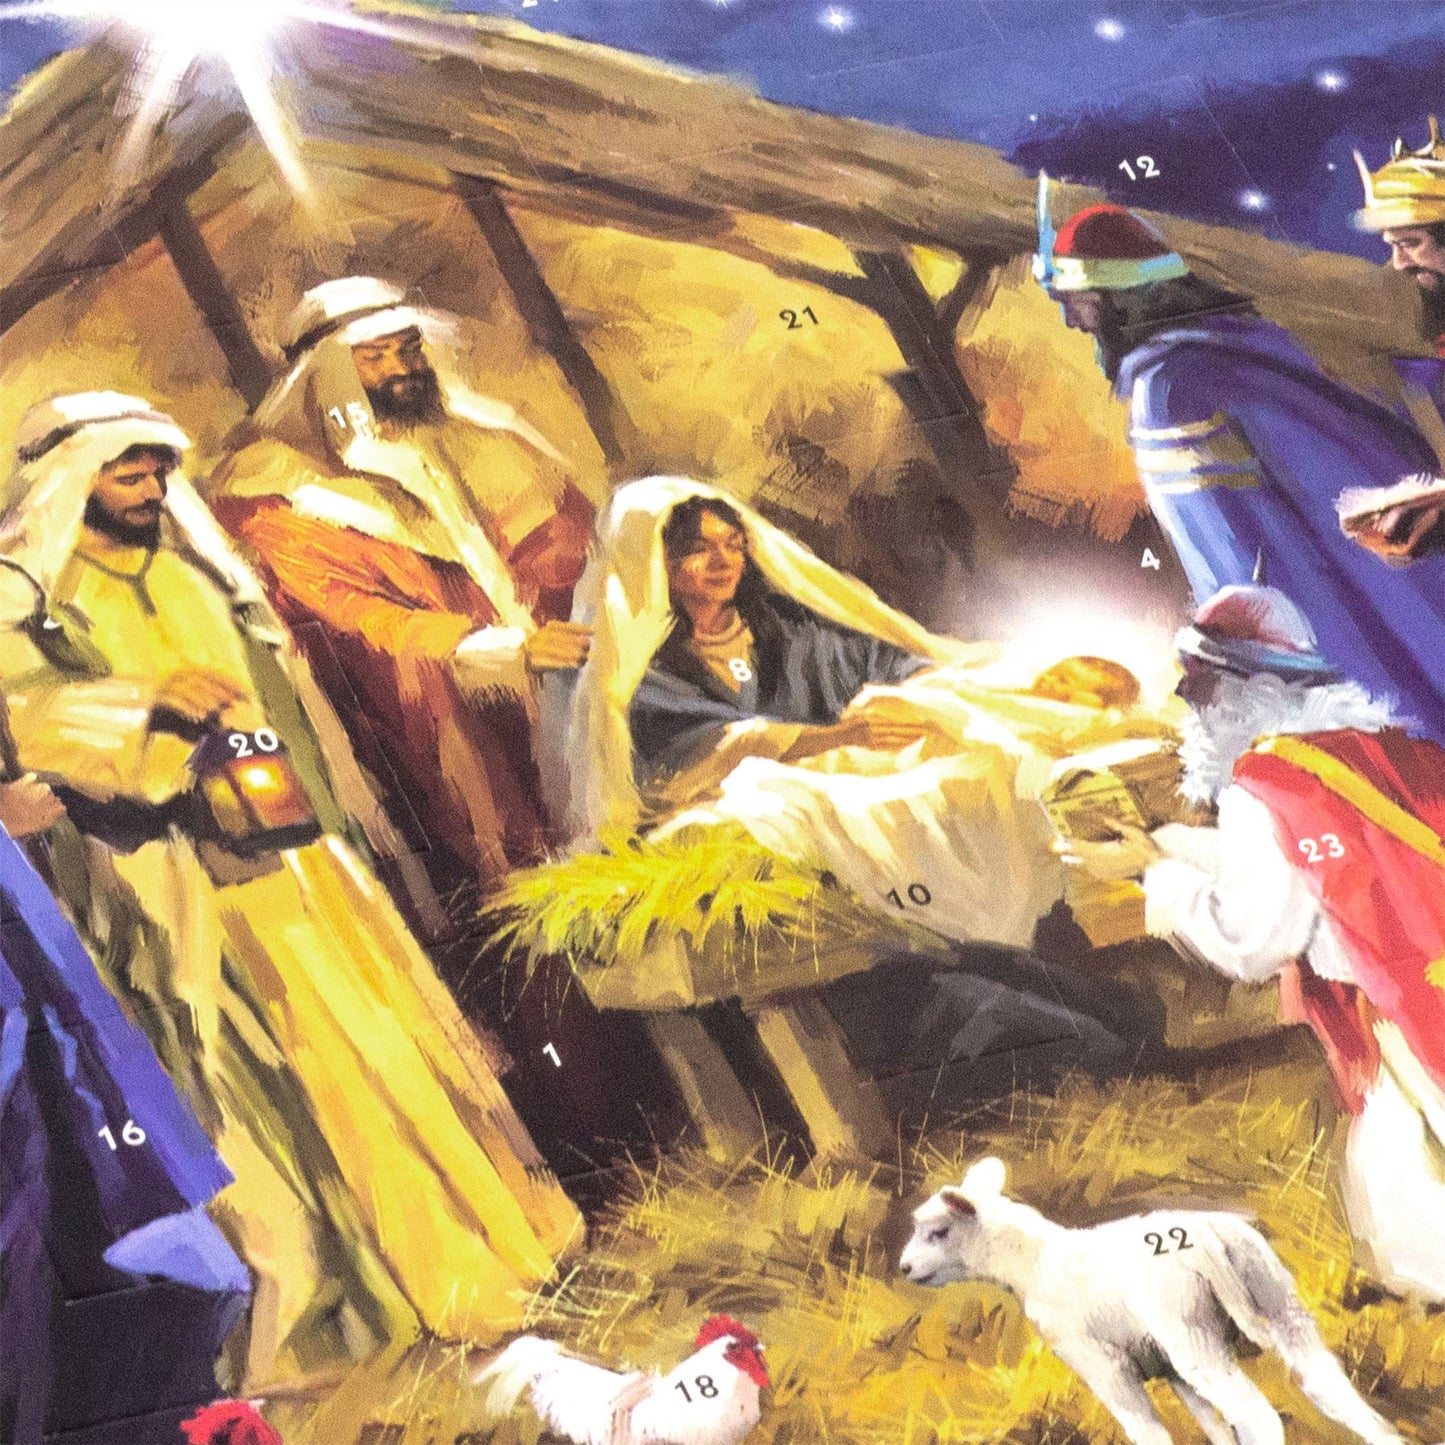 Traditional Christmas Advent Calendar Nativity Scene | Picture Advent Calendar